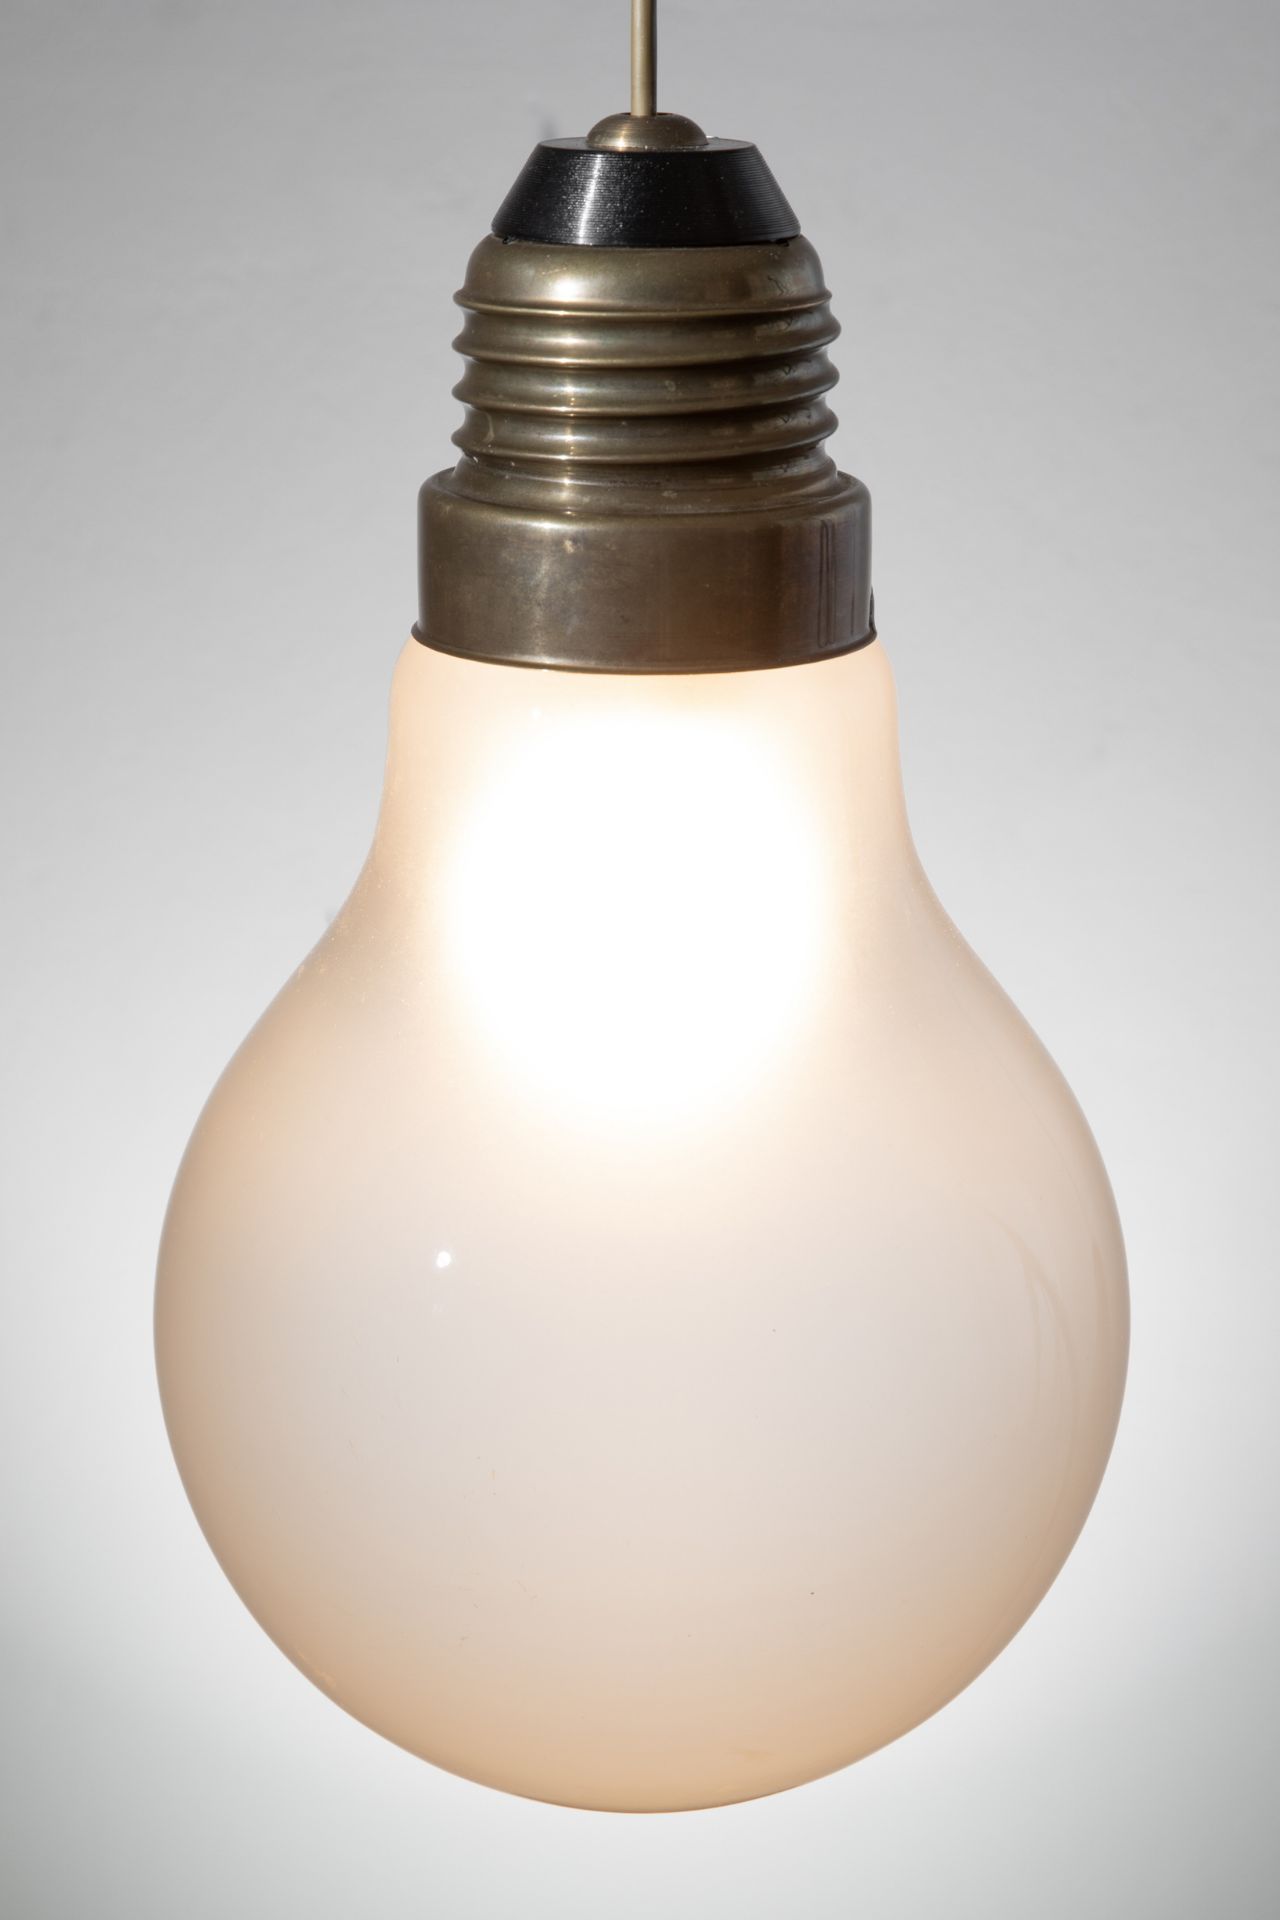 Ingo Maurer, Design M, Leuchte Modell Thomas Alva Edison - Bild 3 aus 4